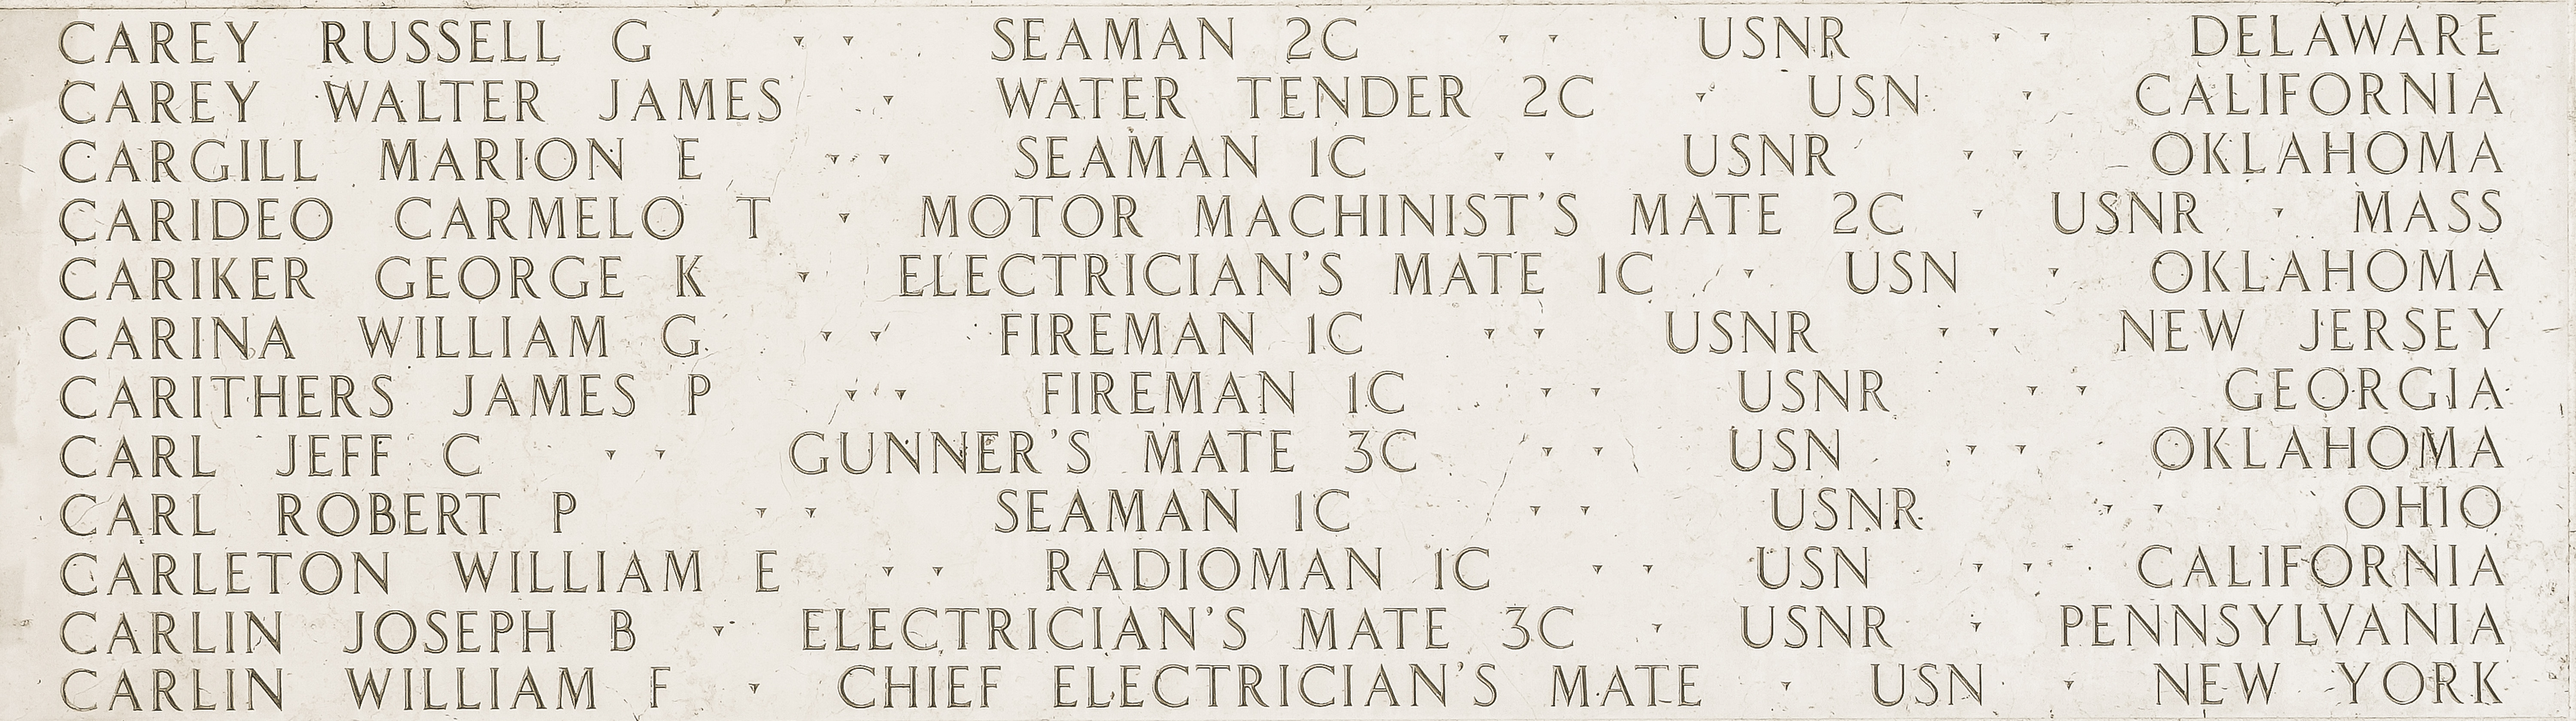 Joseph B. Carlin, Electrician's Mate Third Class